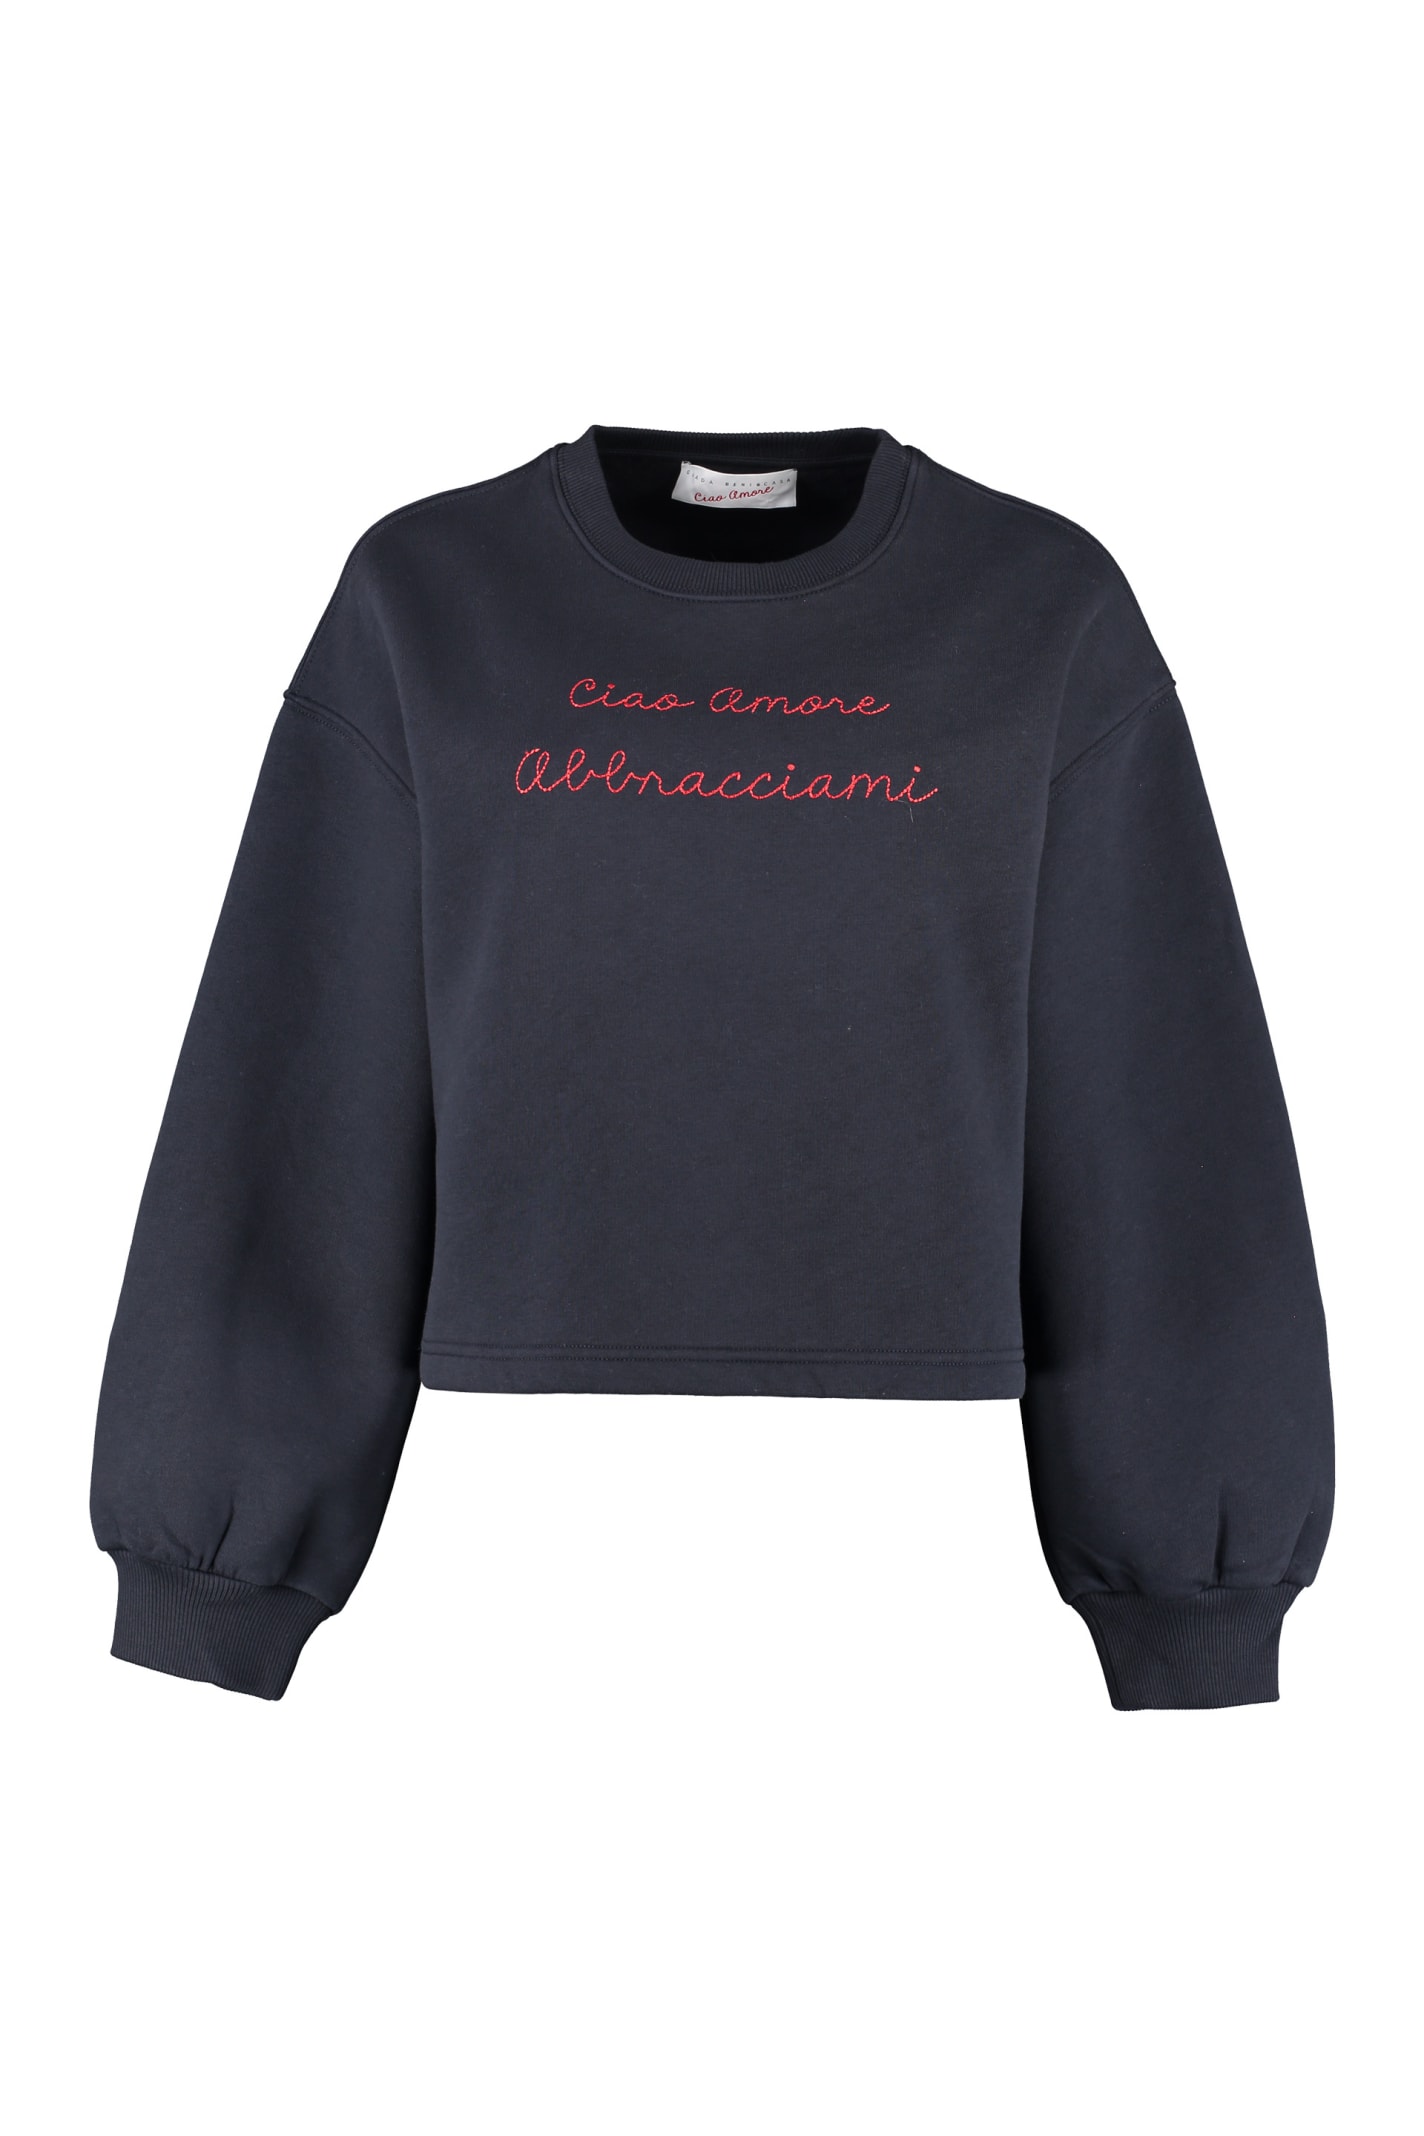 Giada Benincasa Embroidered Crew-nek Sweatshirt